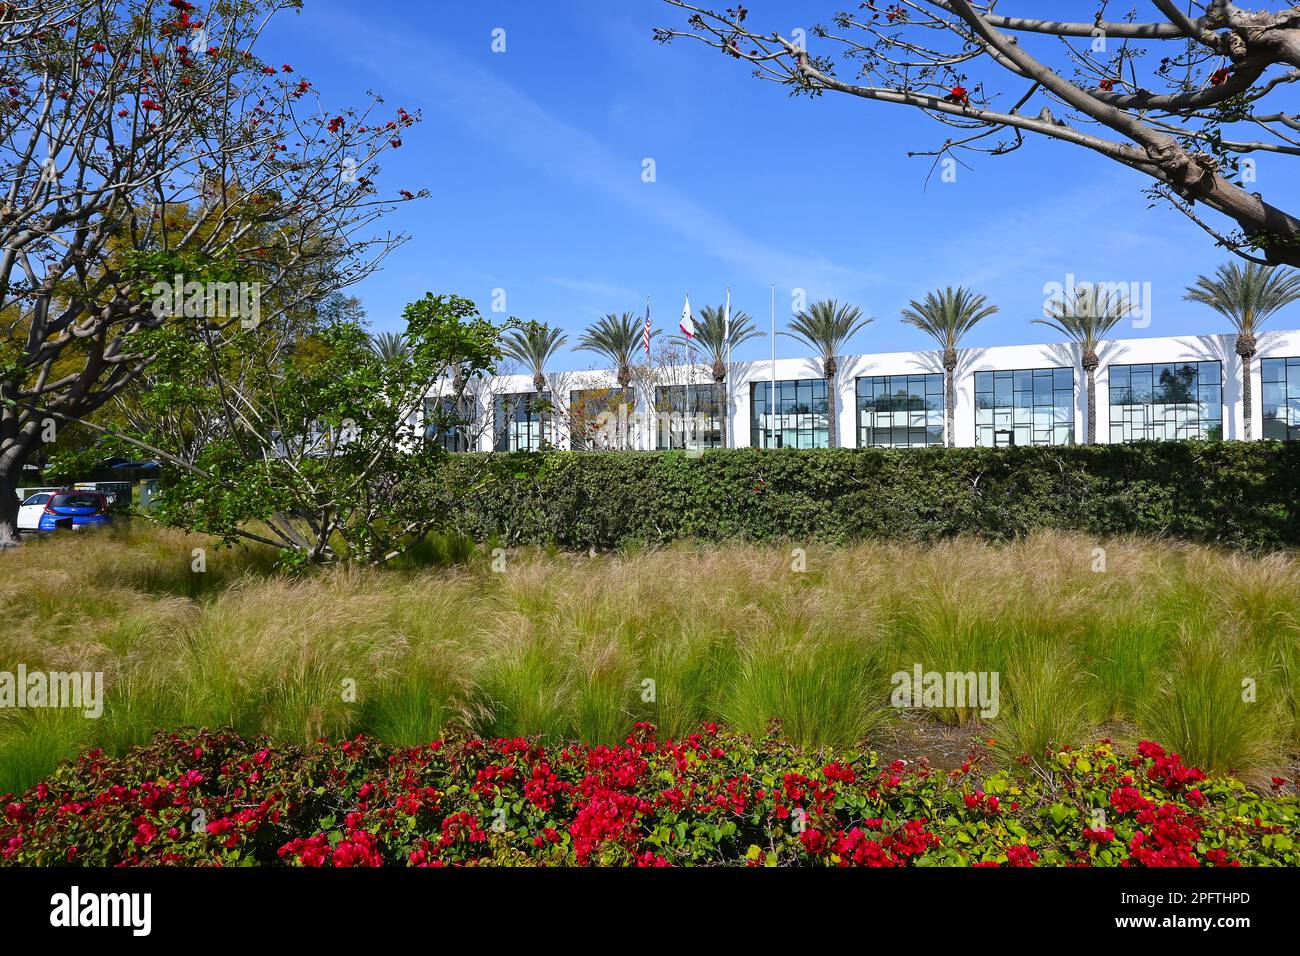 IRVINE, CALIFORNIA - 17 MAR 2023: The Kia America Headquarters Campus on Peters Canyon Road. Stock Photo